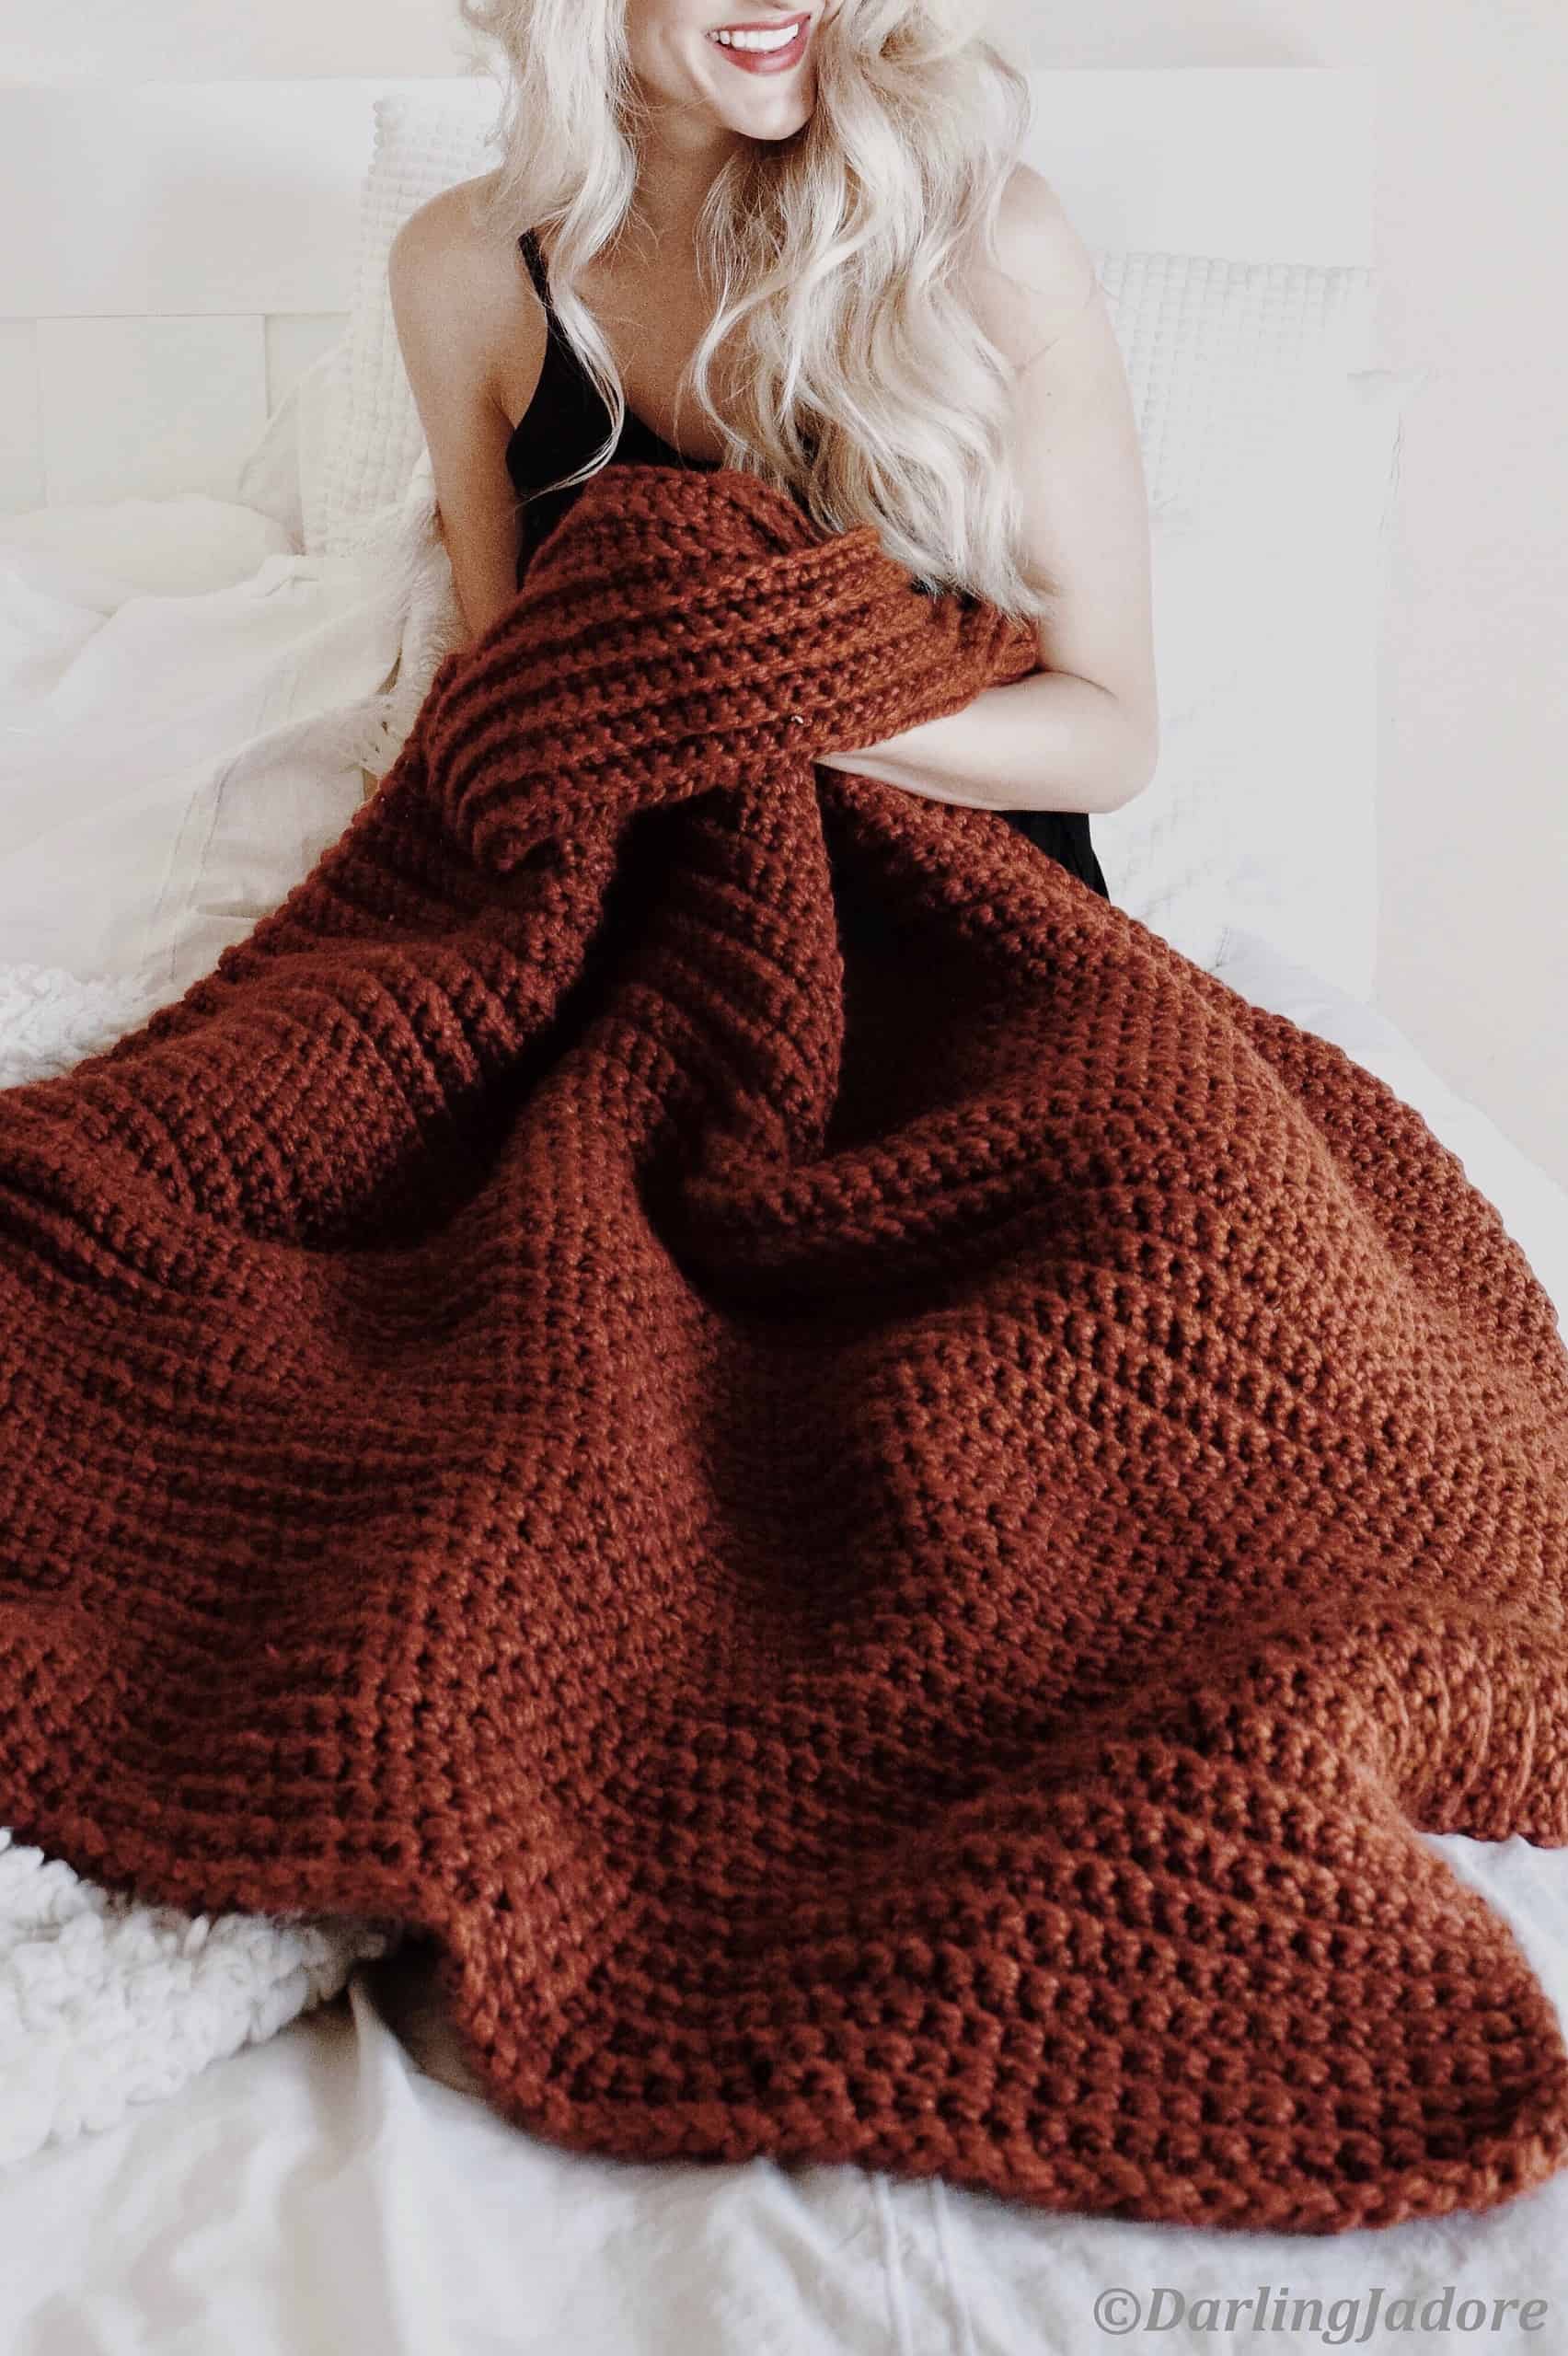 The Fireside Throw Crochet Pattern